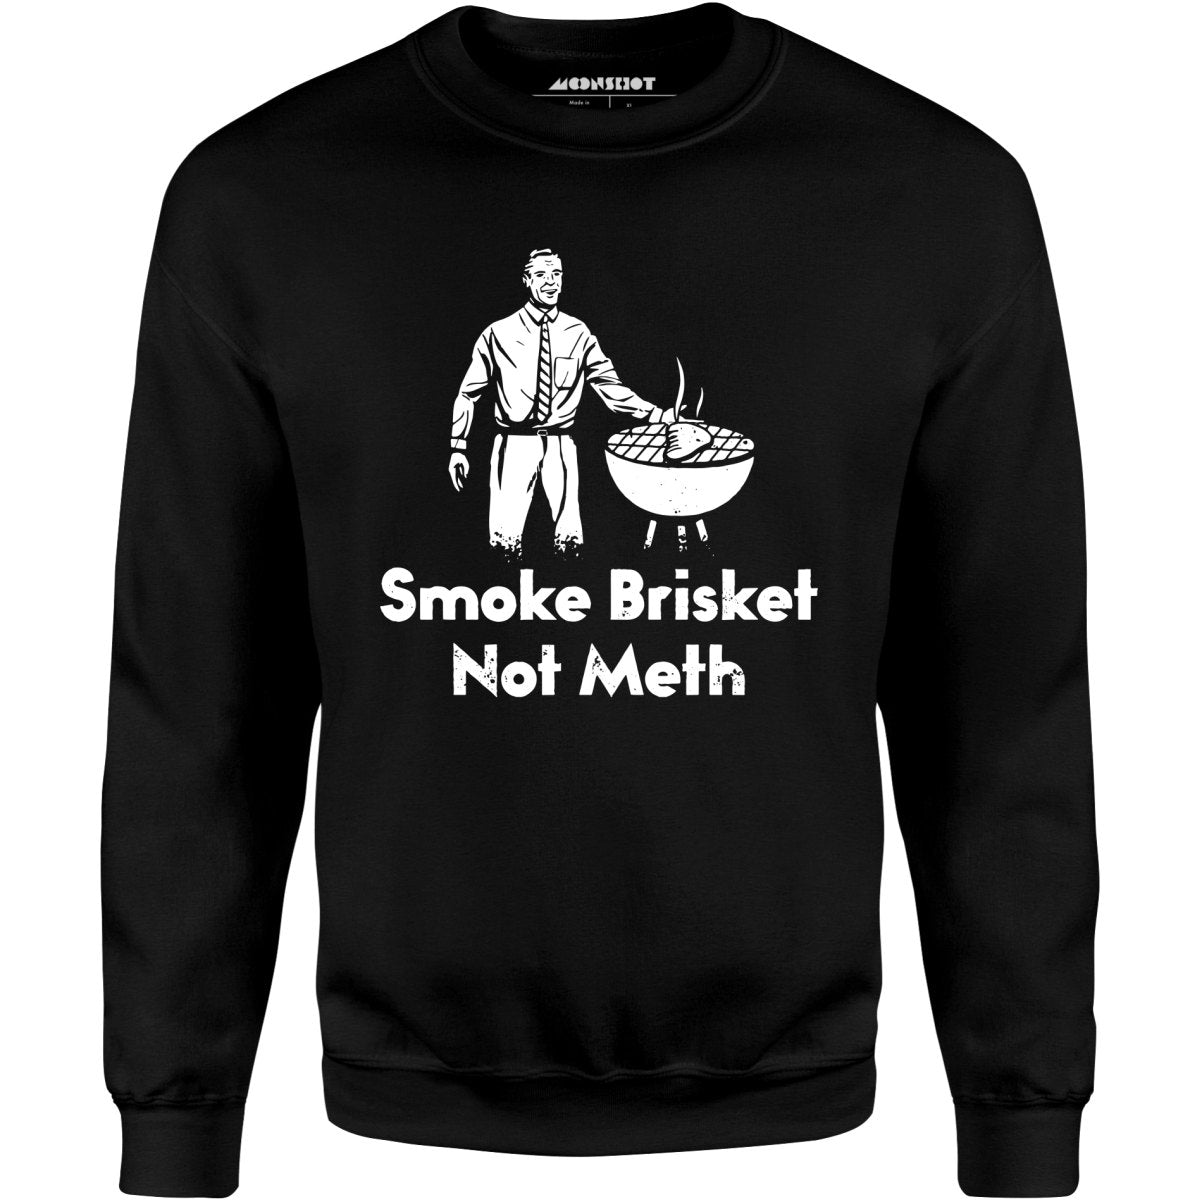 Smoke Brisket Not Meth v2 - Unisex Sweatshirt